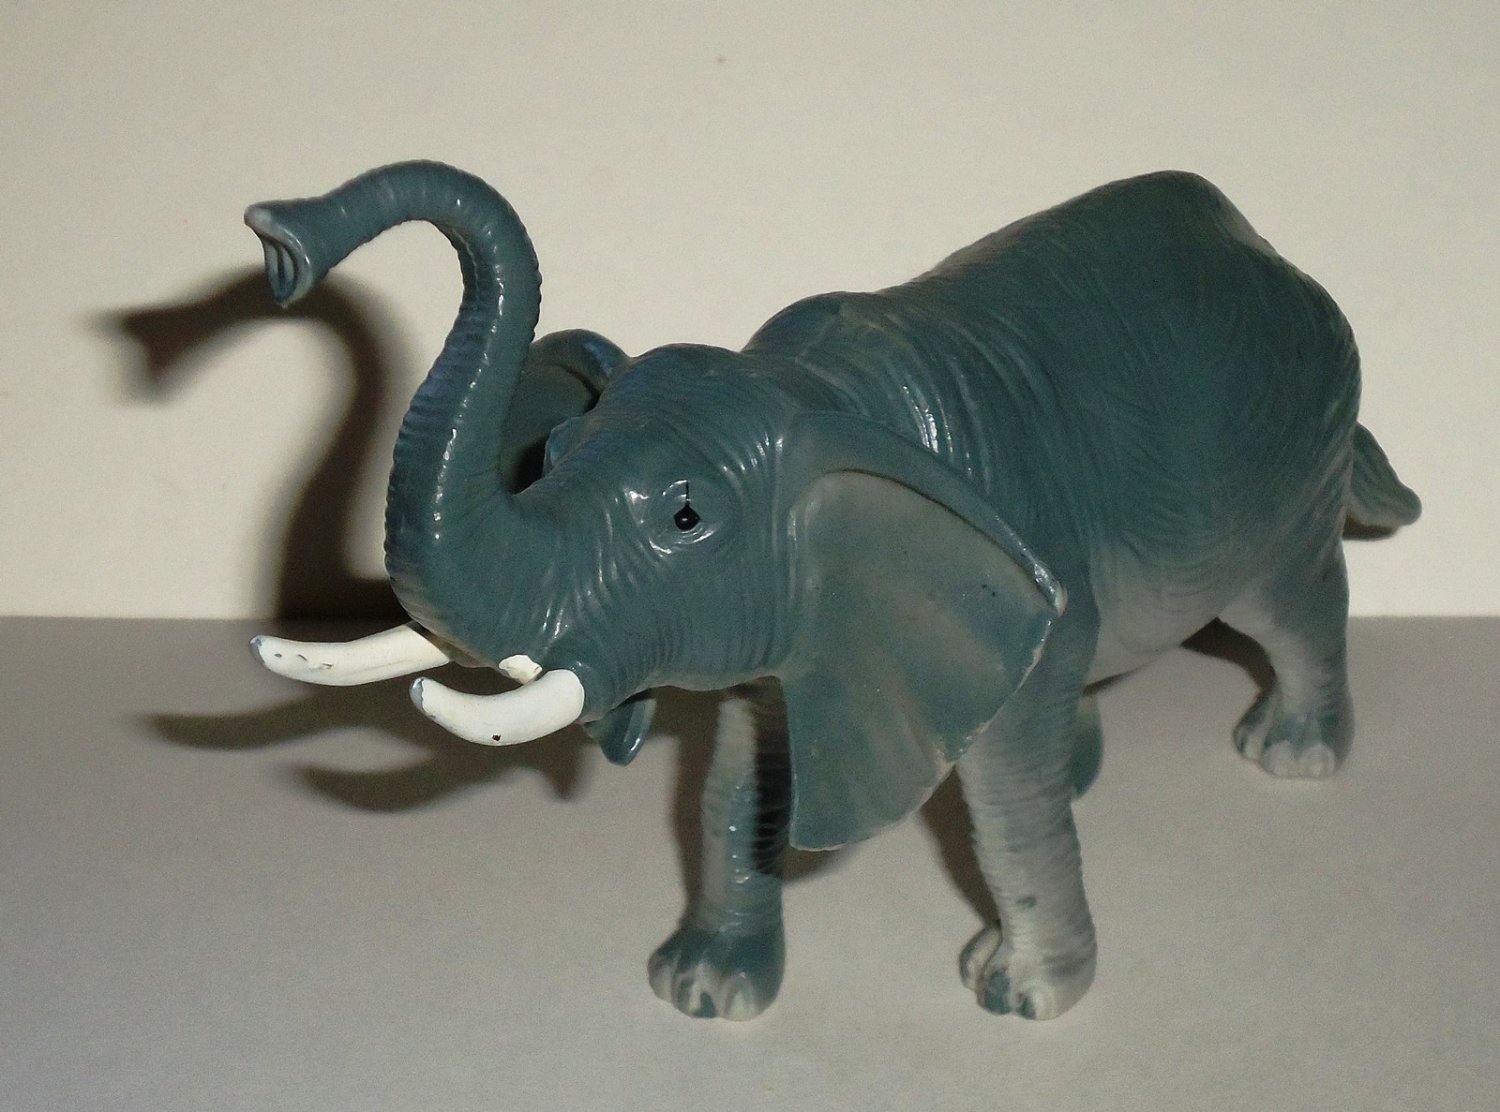 Greenbrier 5.25" Long Plastic Elephant Toy Animal Figure